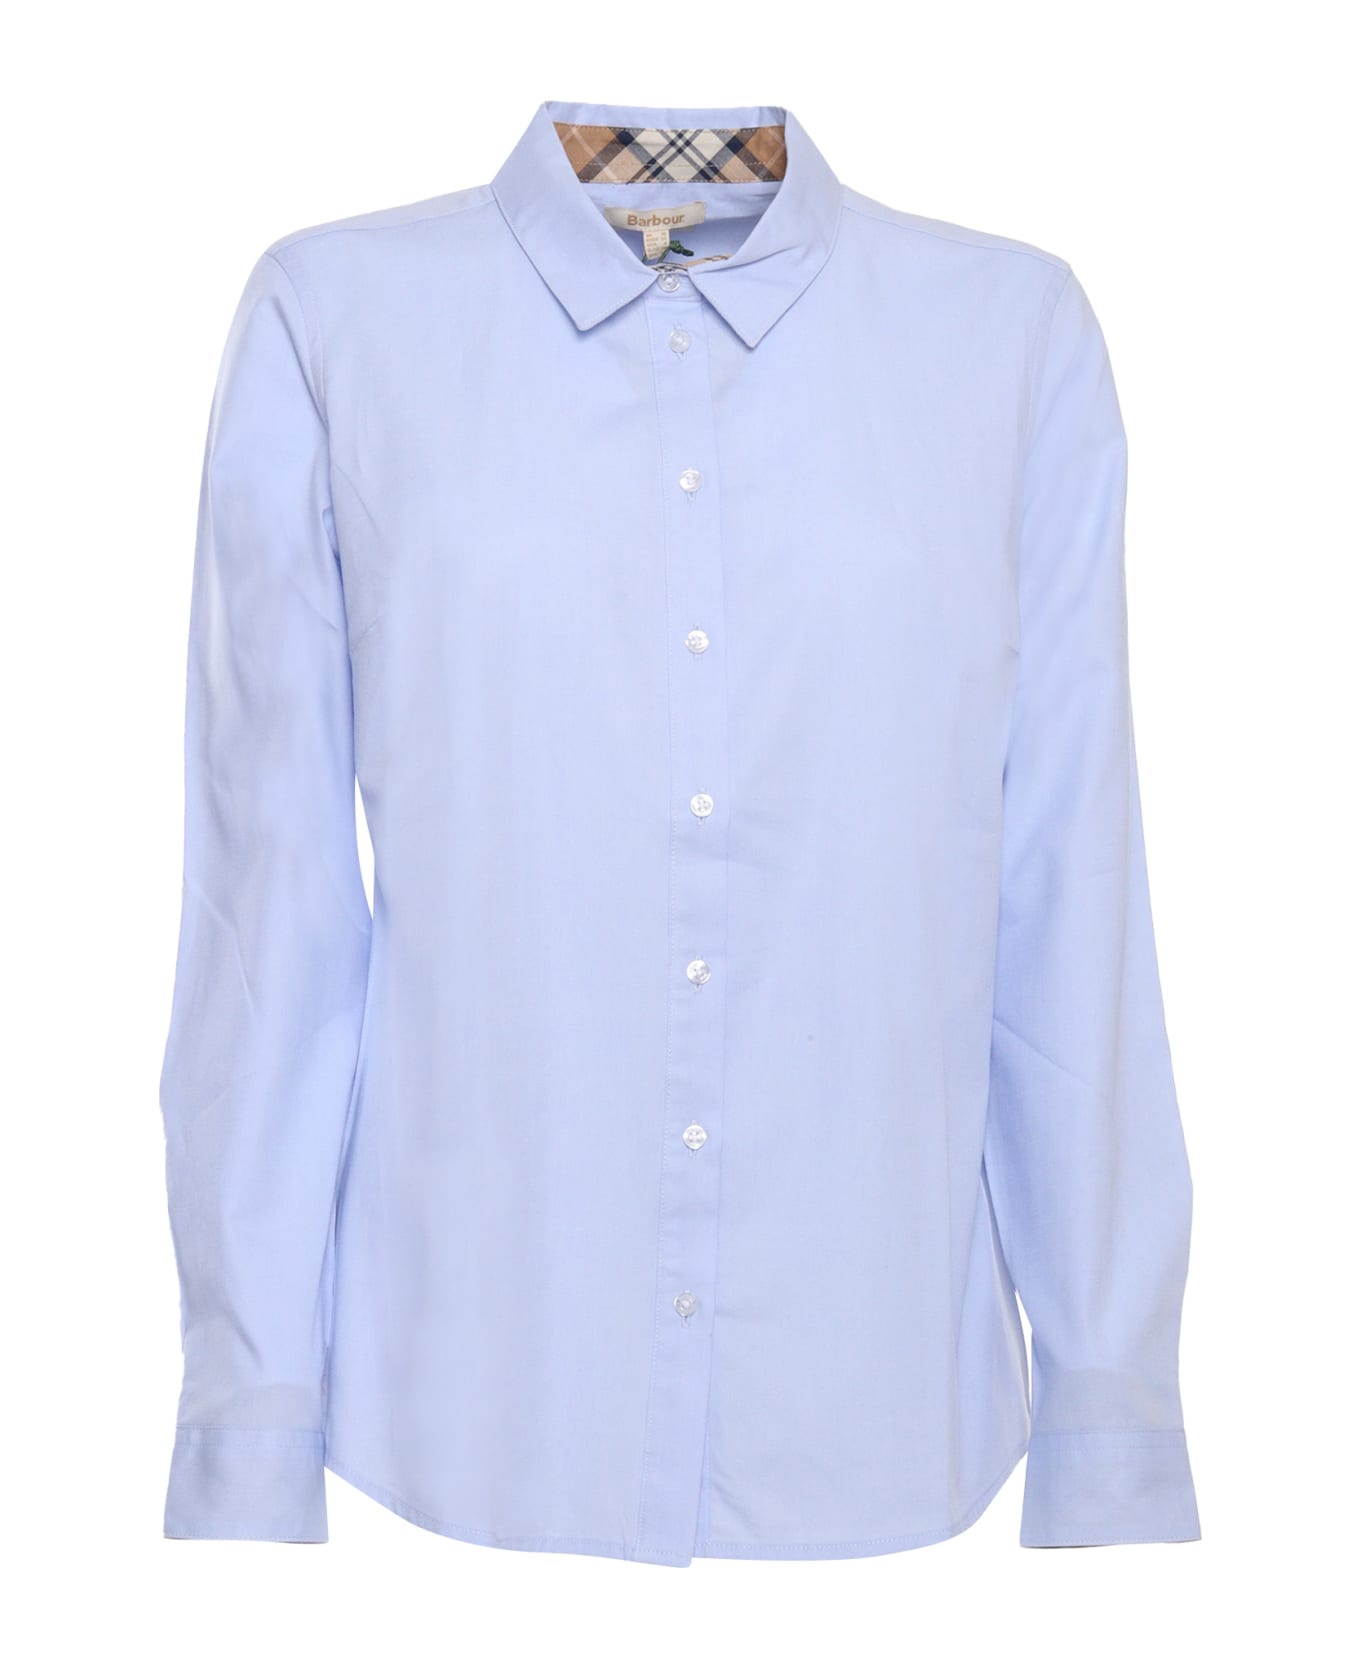 Barbour Light Blue Shirt - BLUE シャツ